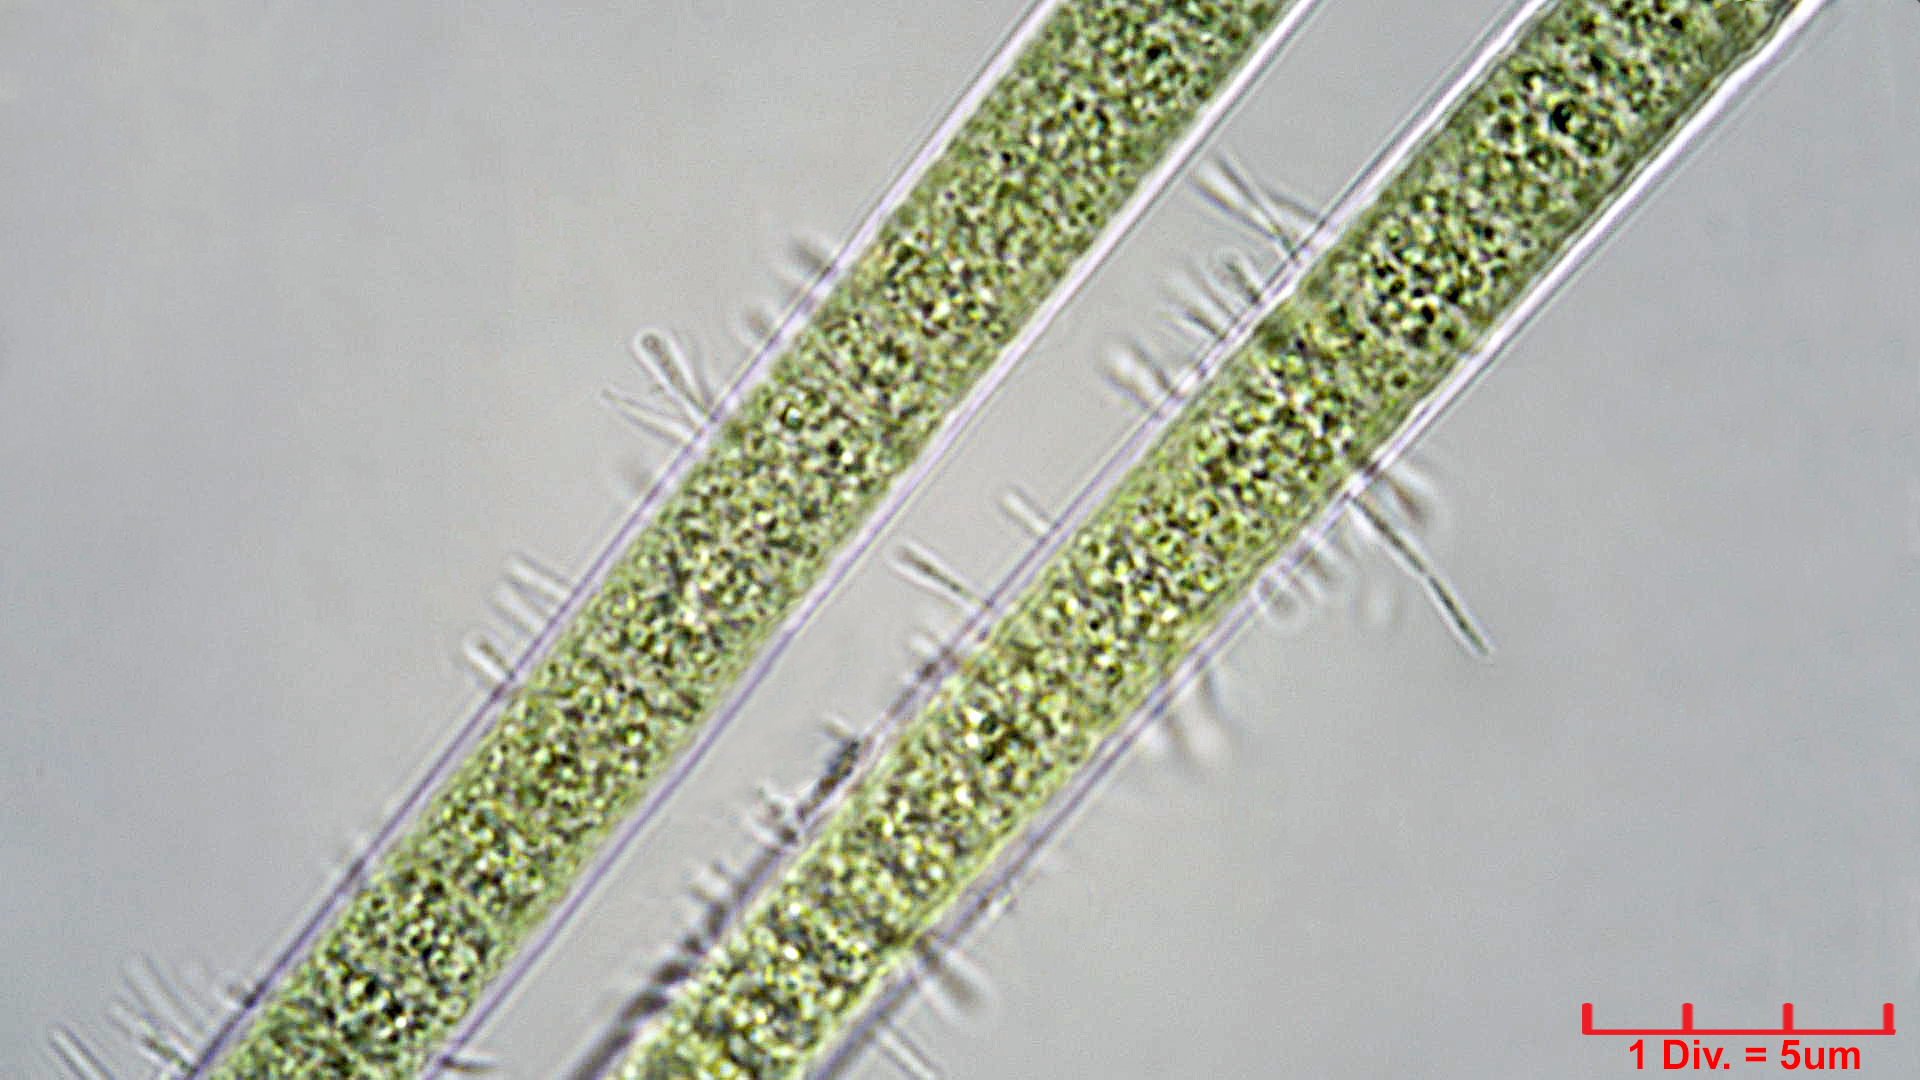 Cyanobacteria/Oscillatoriales/Oscillatoriaceae/Lyngbya/semiplena/lyngbya-semiplena-4.jpg